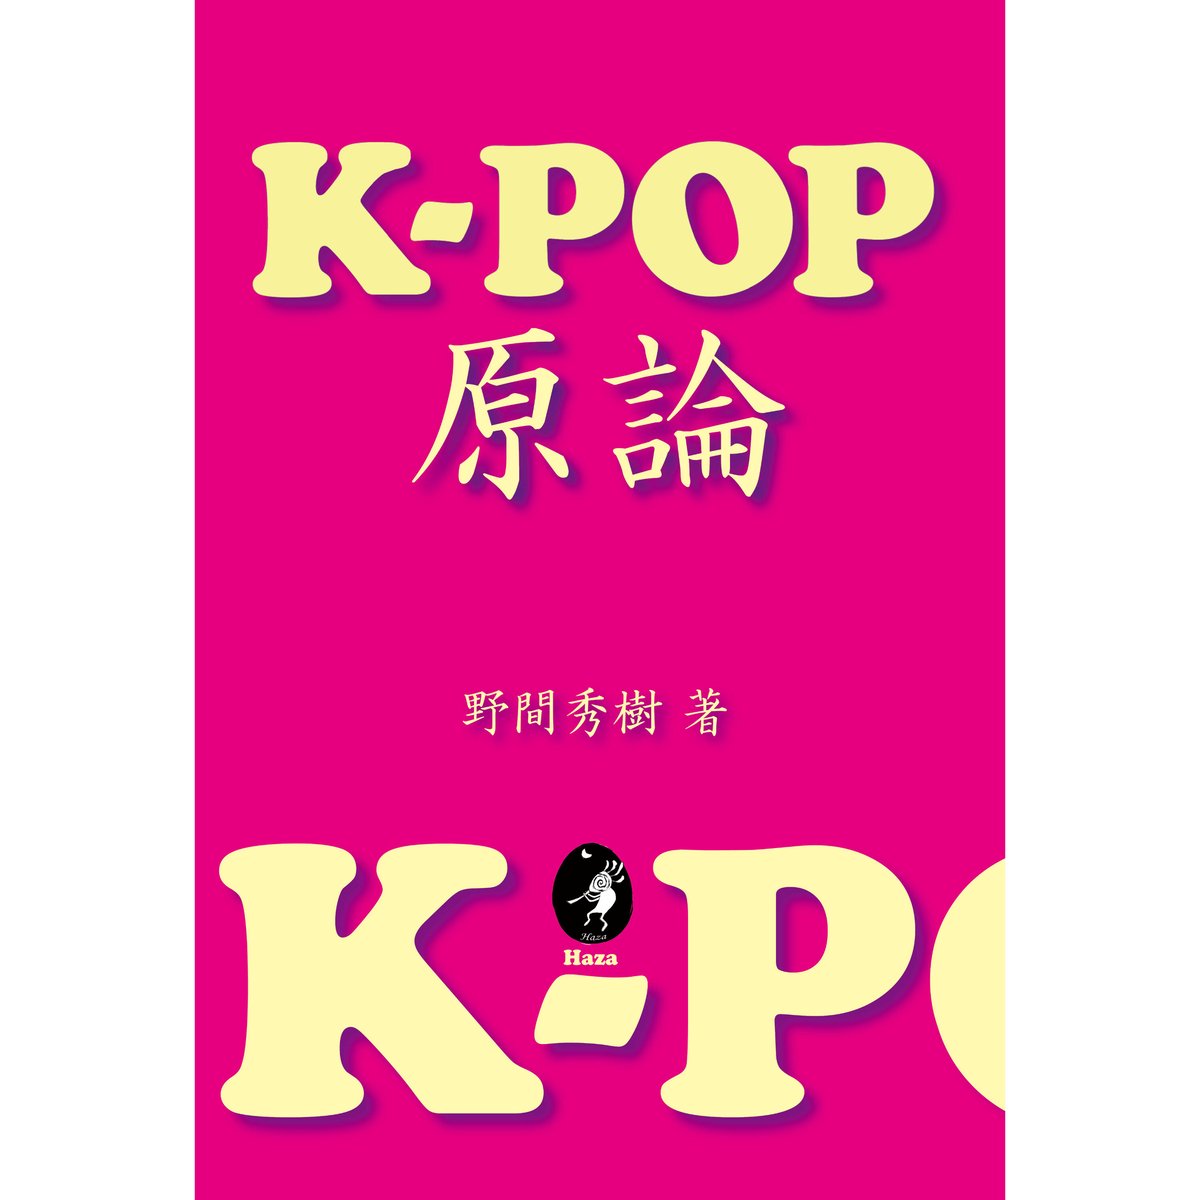 K-POP原論　ハザ（Haza）書店